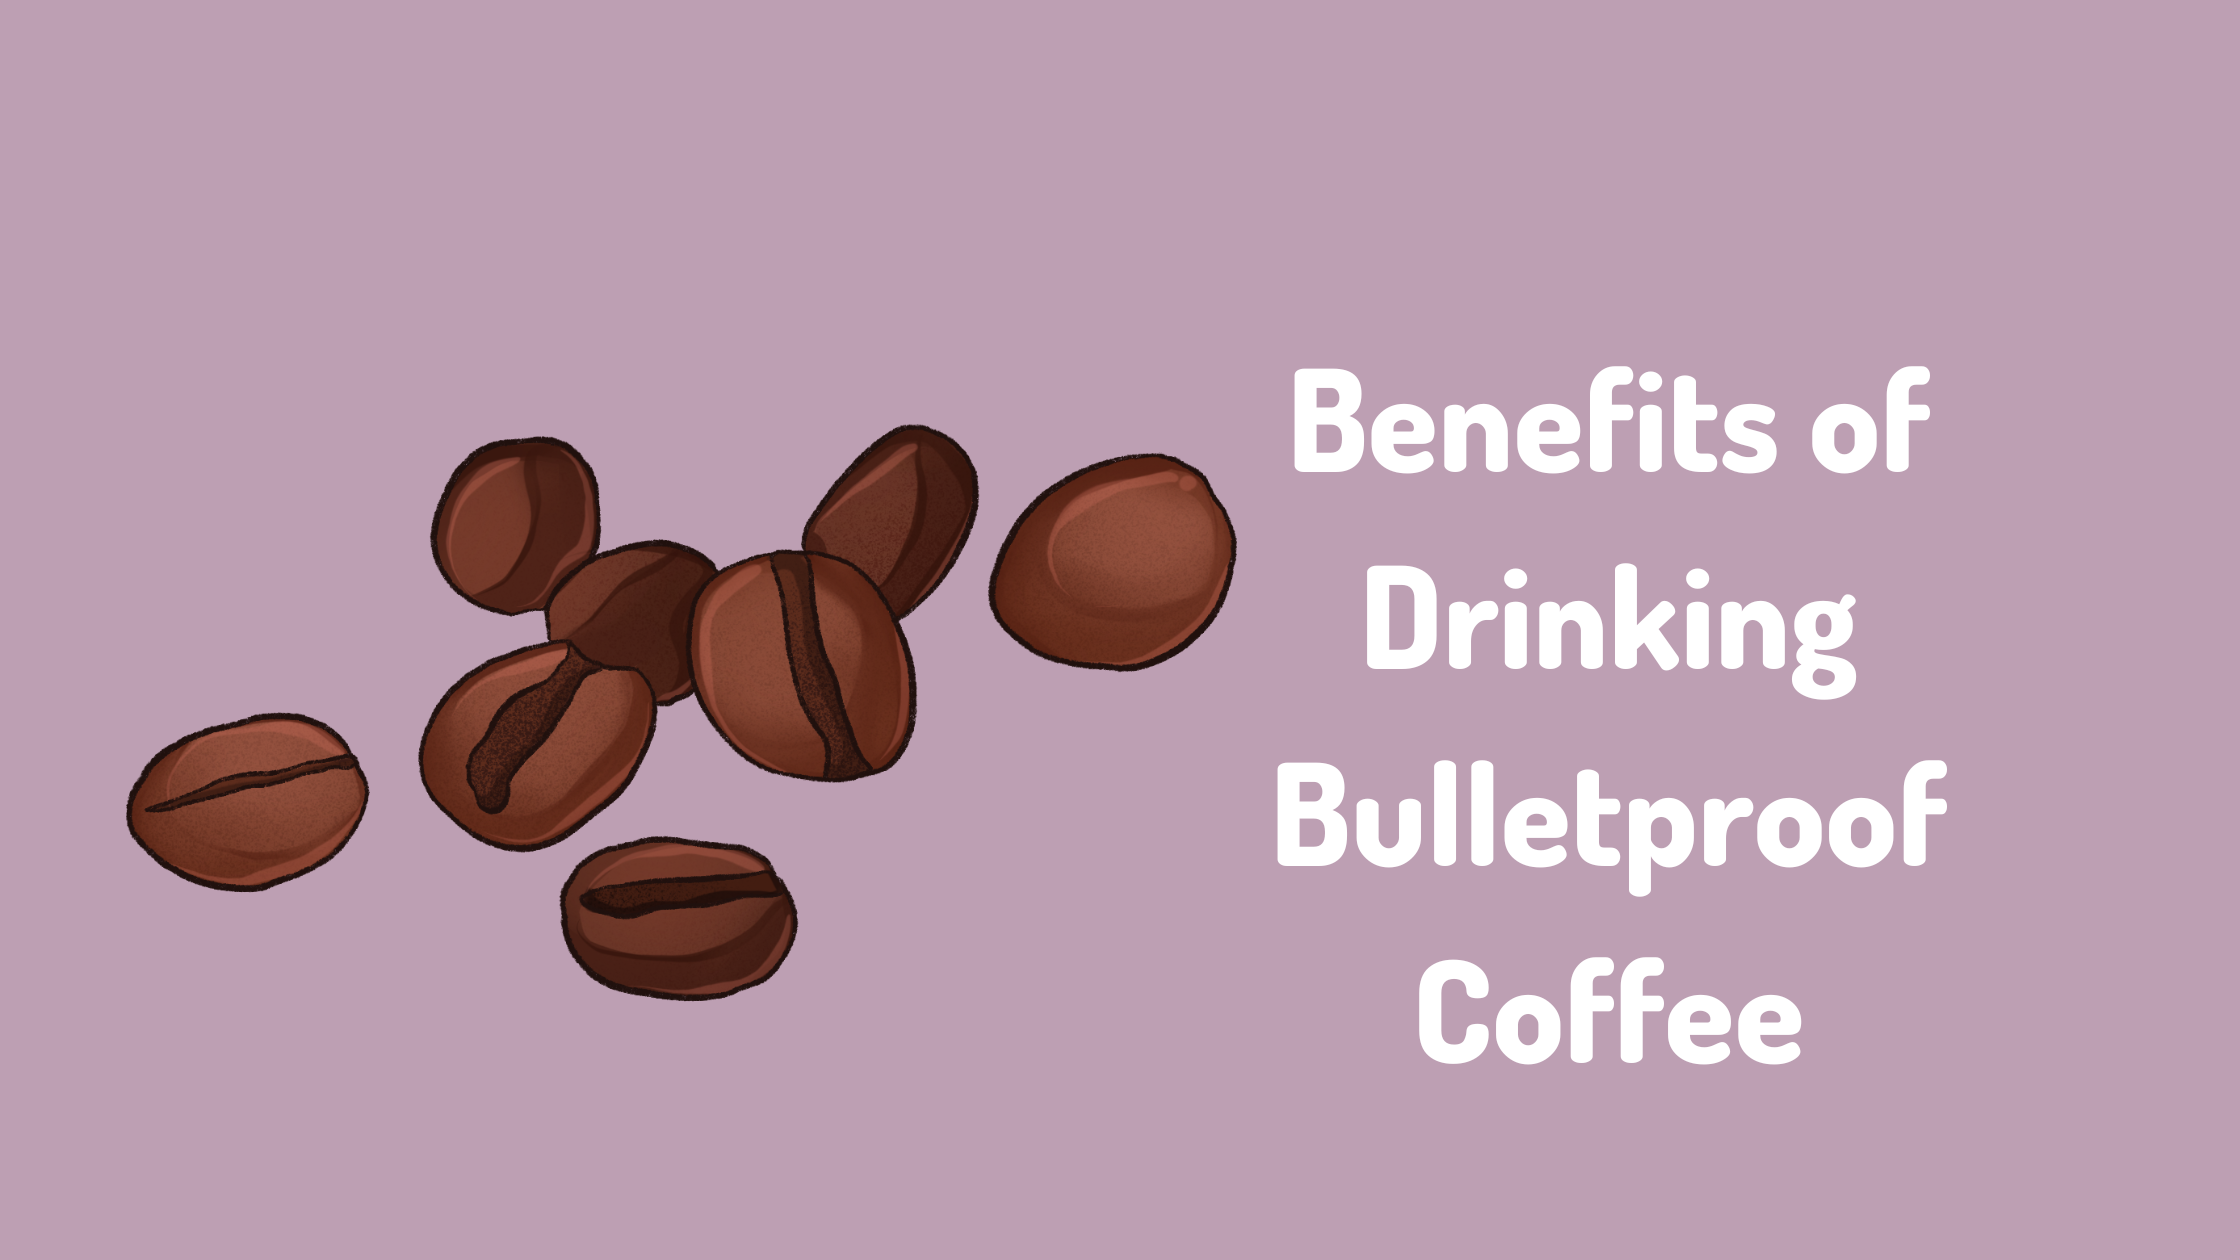 Benefits of Drinking Bulletproof Coffee